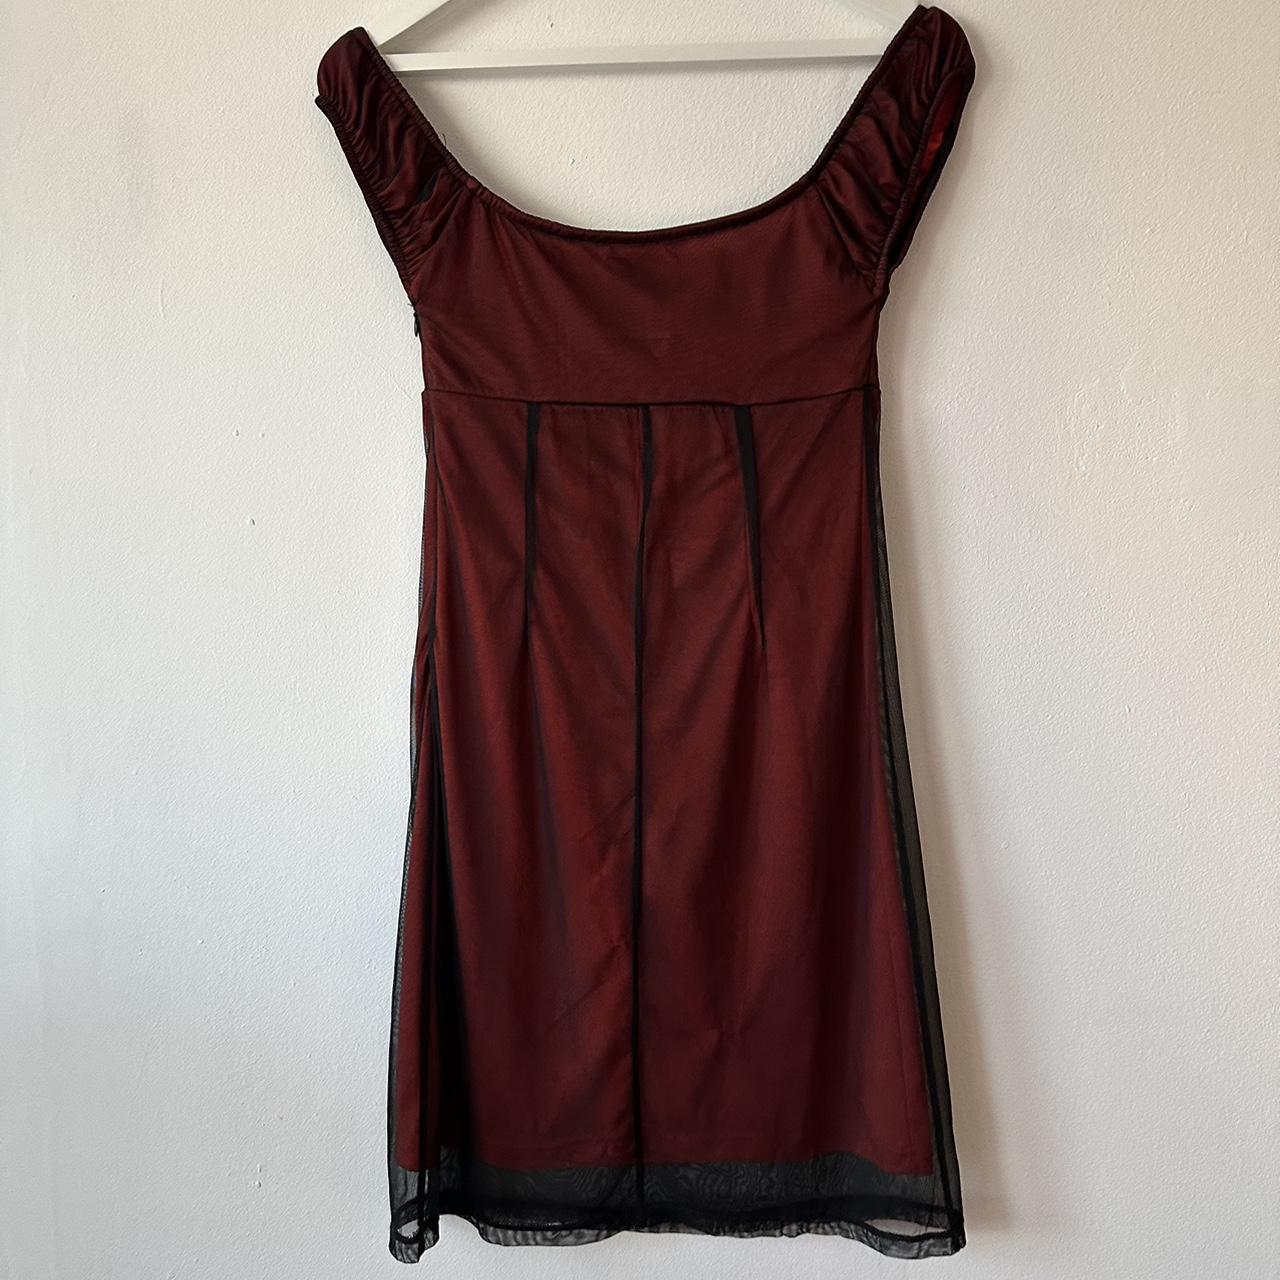 Unif linger mini dress dark red medium Open to... - Depop